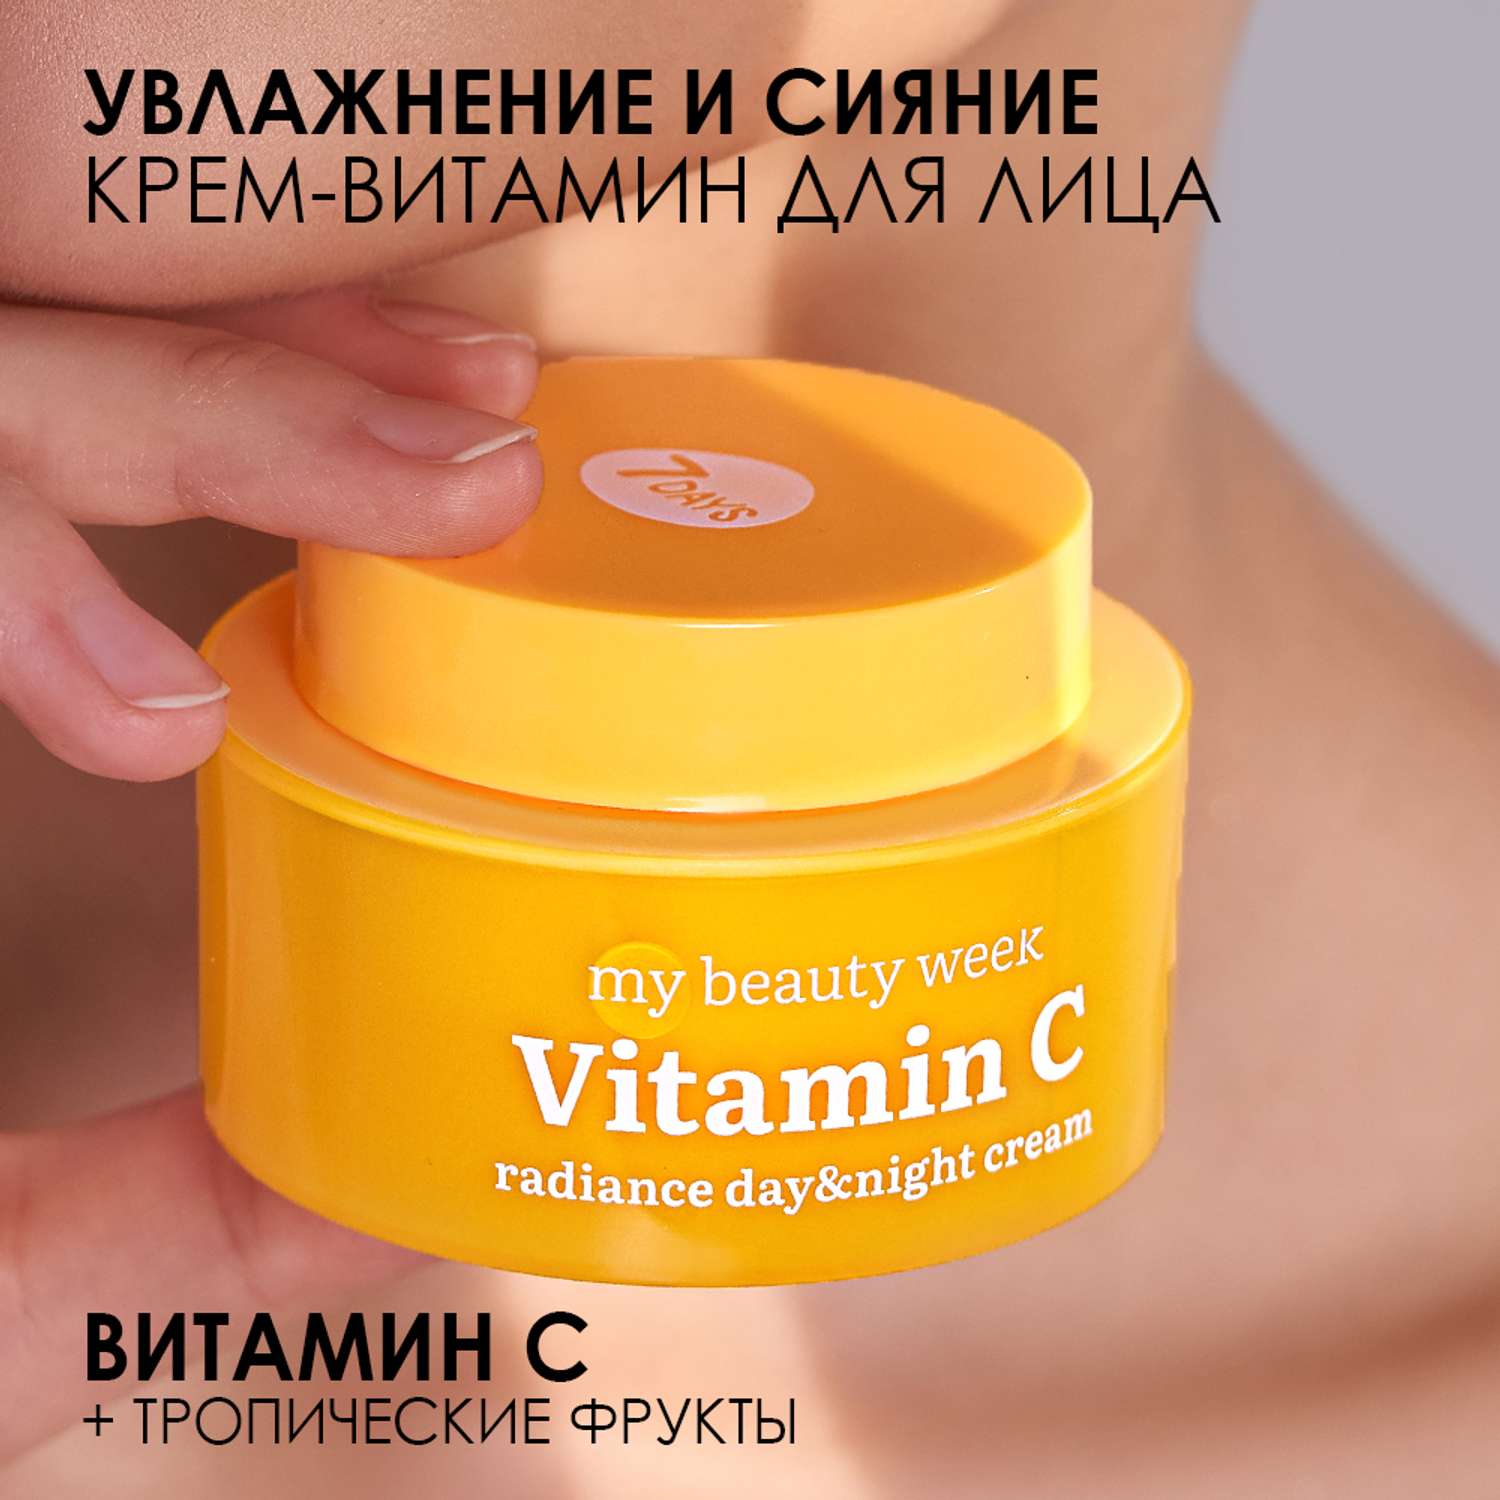 Крем для лица 7DAYS Vitamin С придающий сияние коже - фото 2